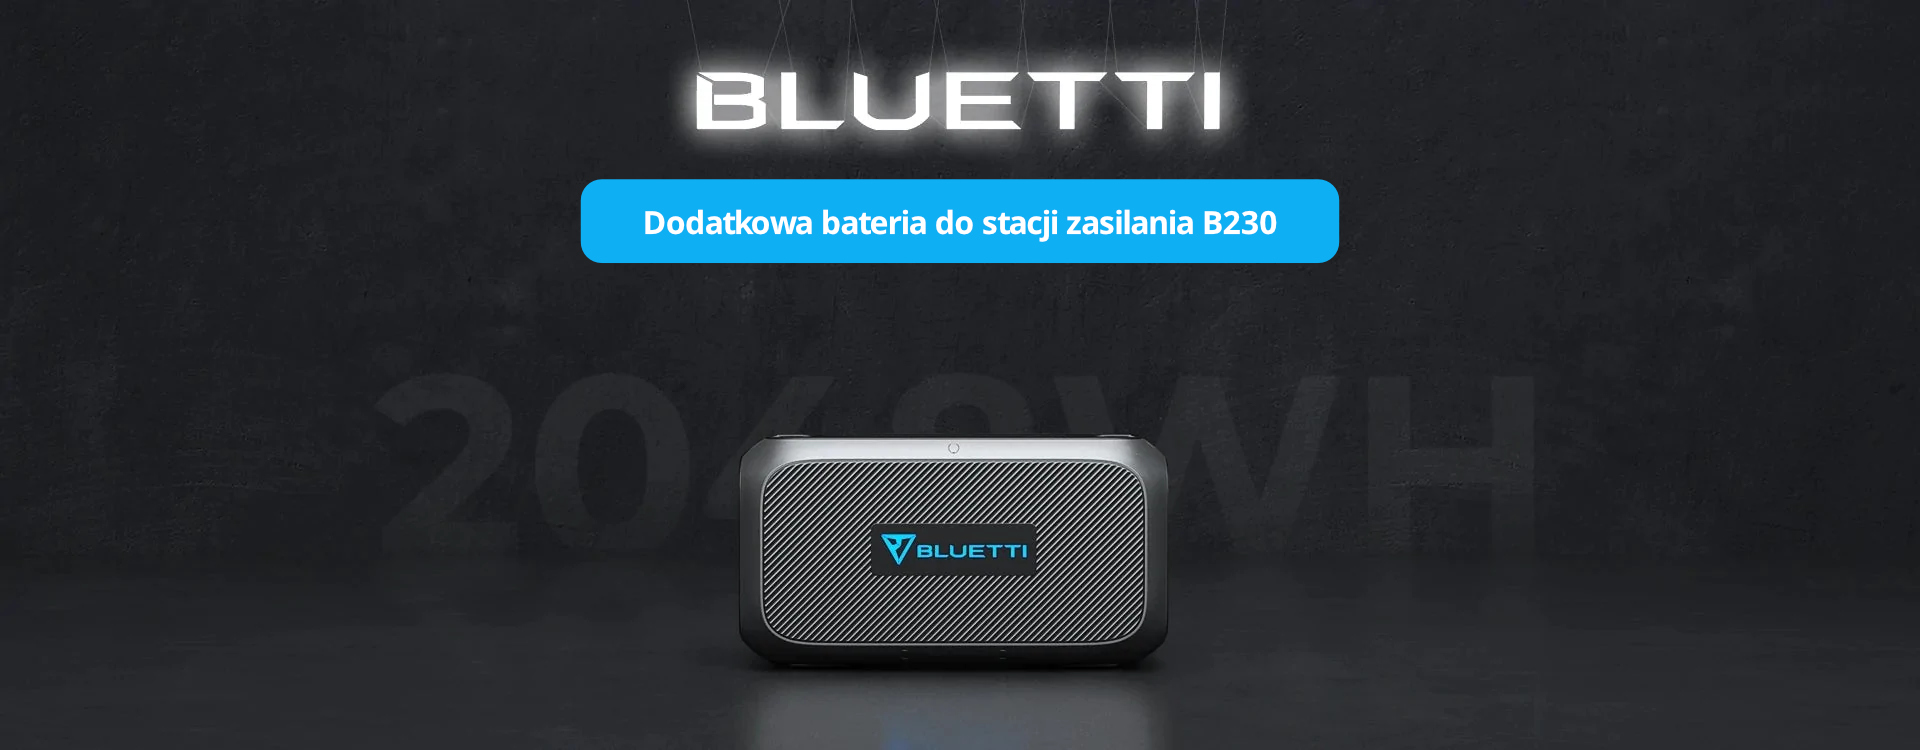 Bluetti B230